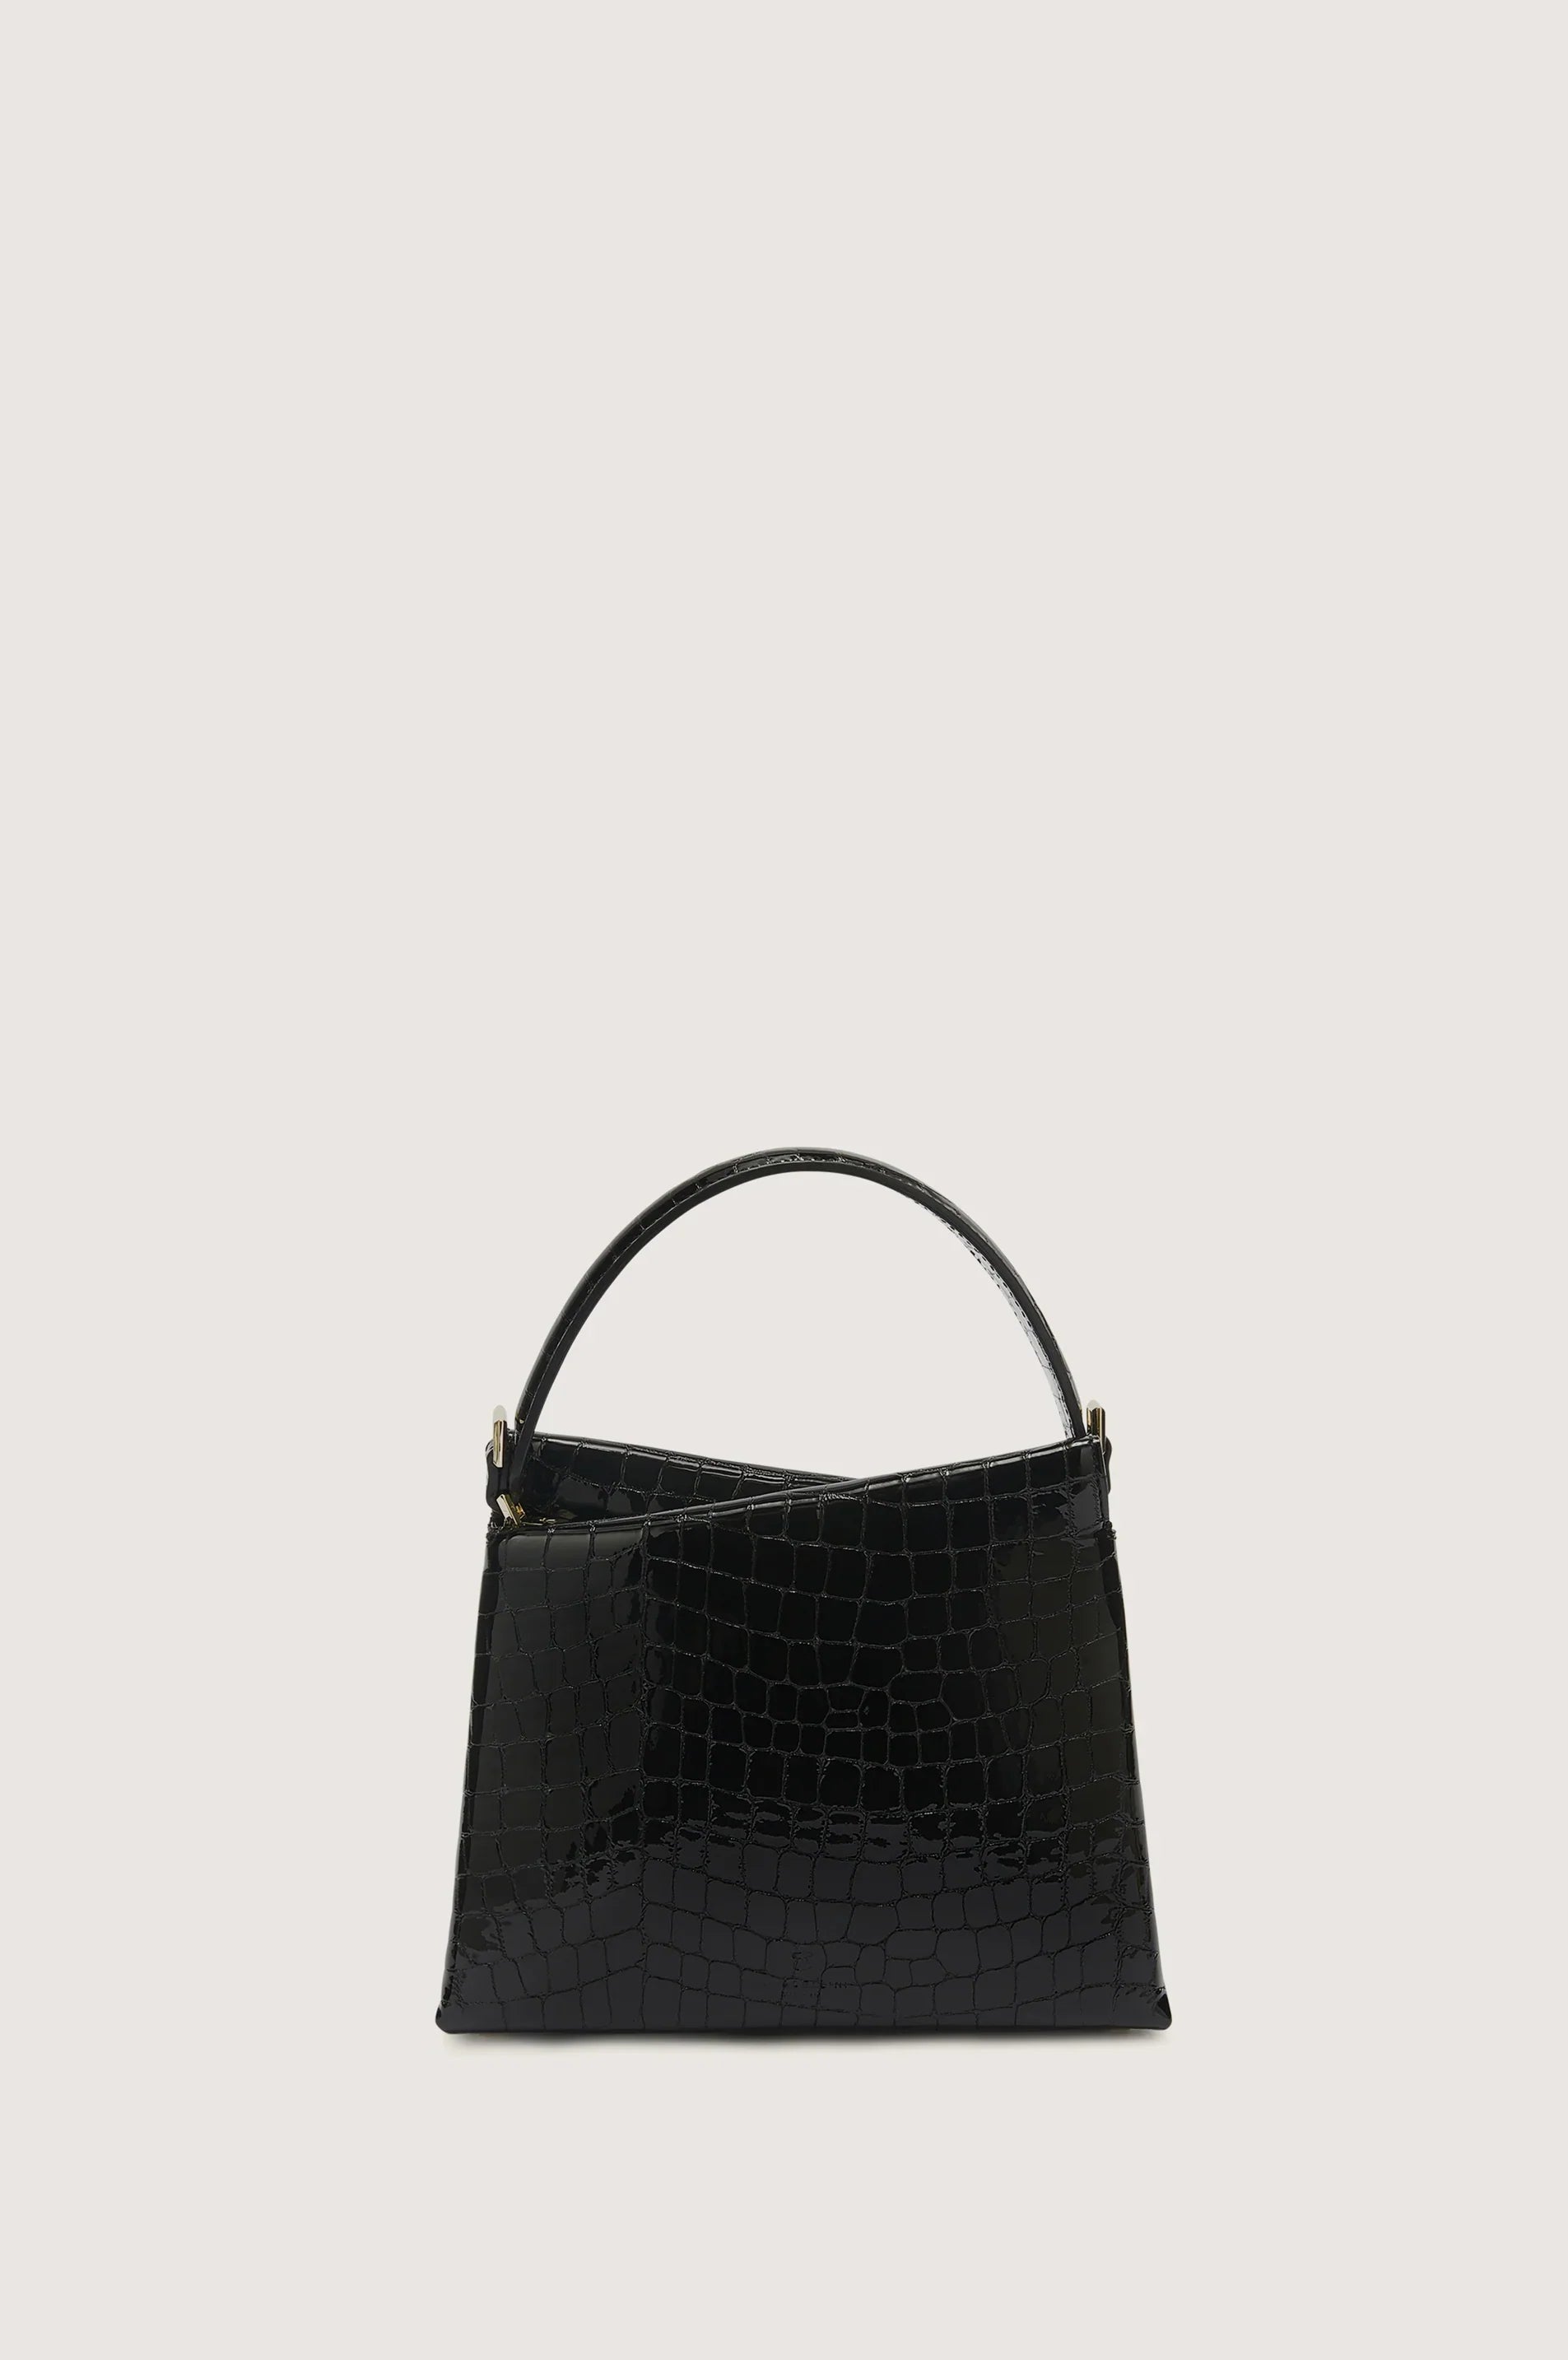 Lara Bellini Calfskin Geometric Handbag